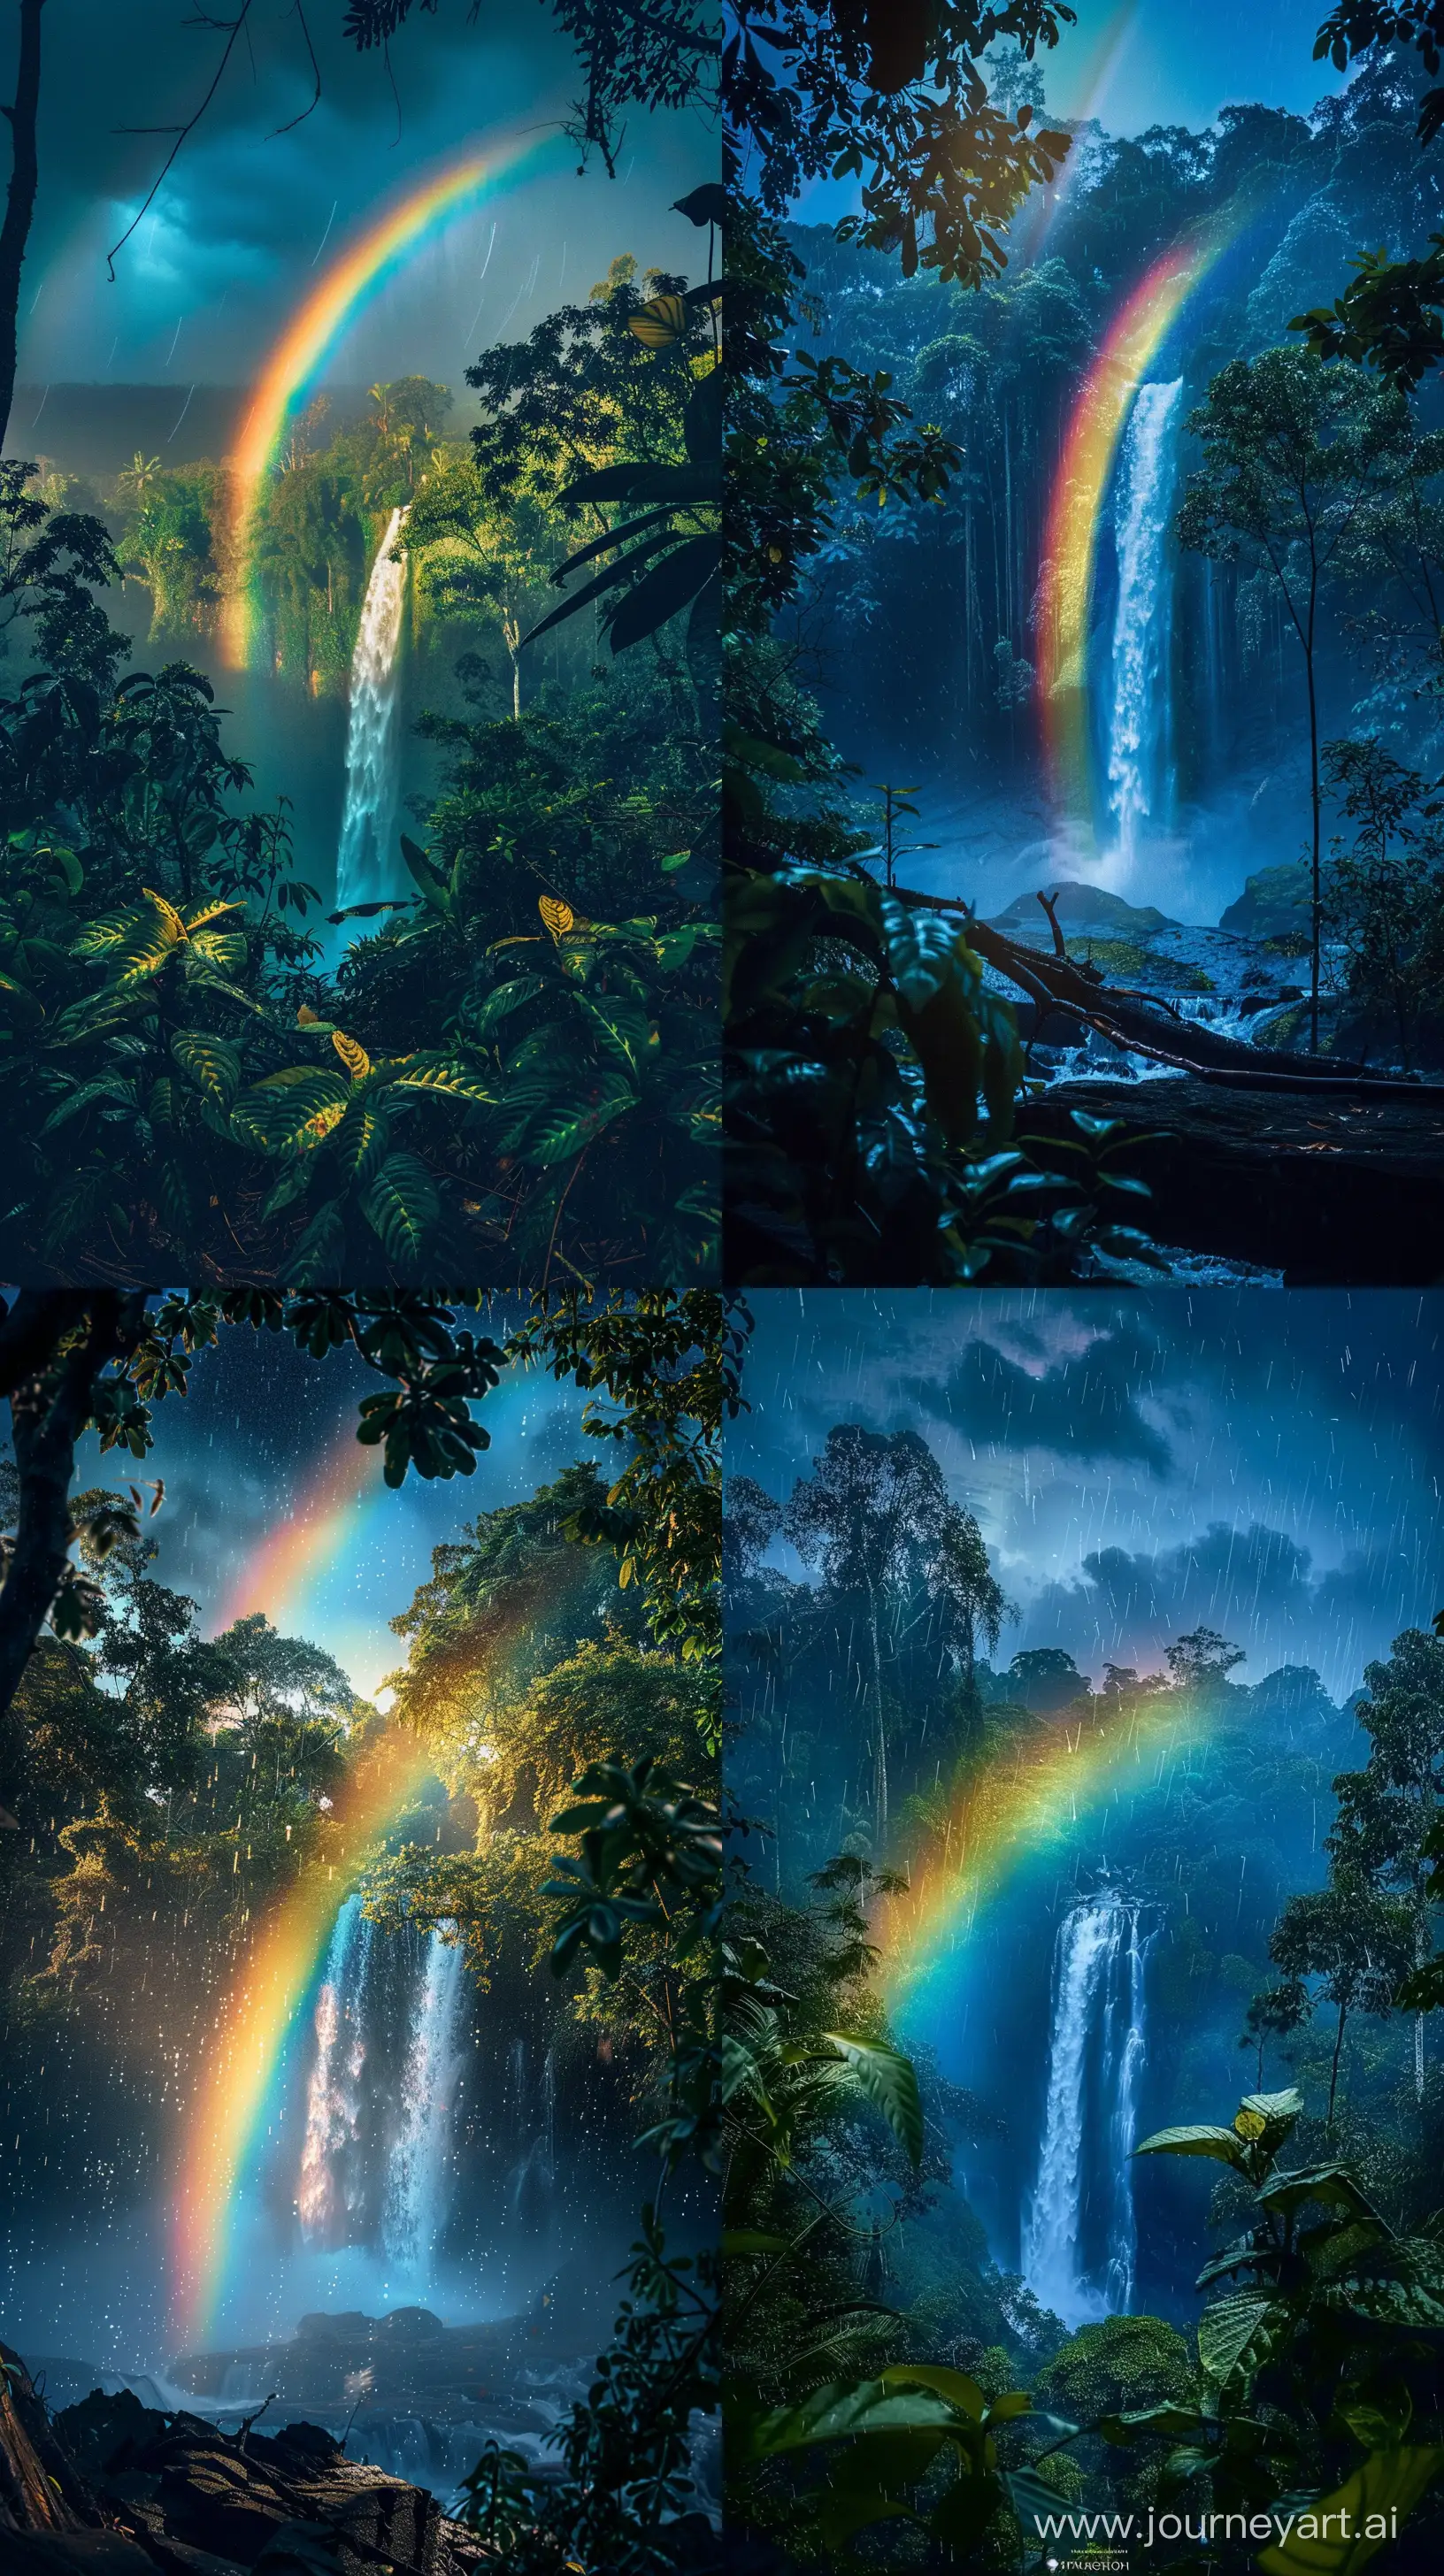 Enchanting-Forest-Waterfall-Underneath-a-Vibrant-Rainbow-on-a-Rainy-Night